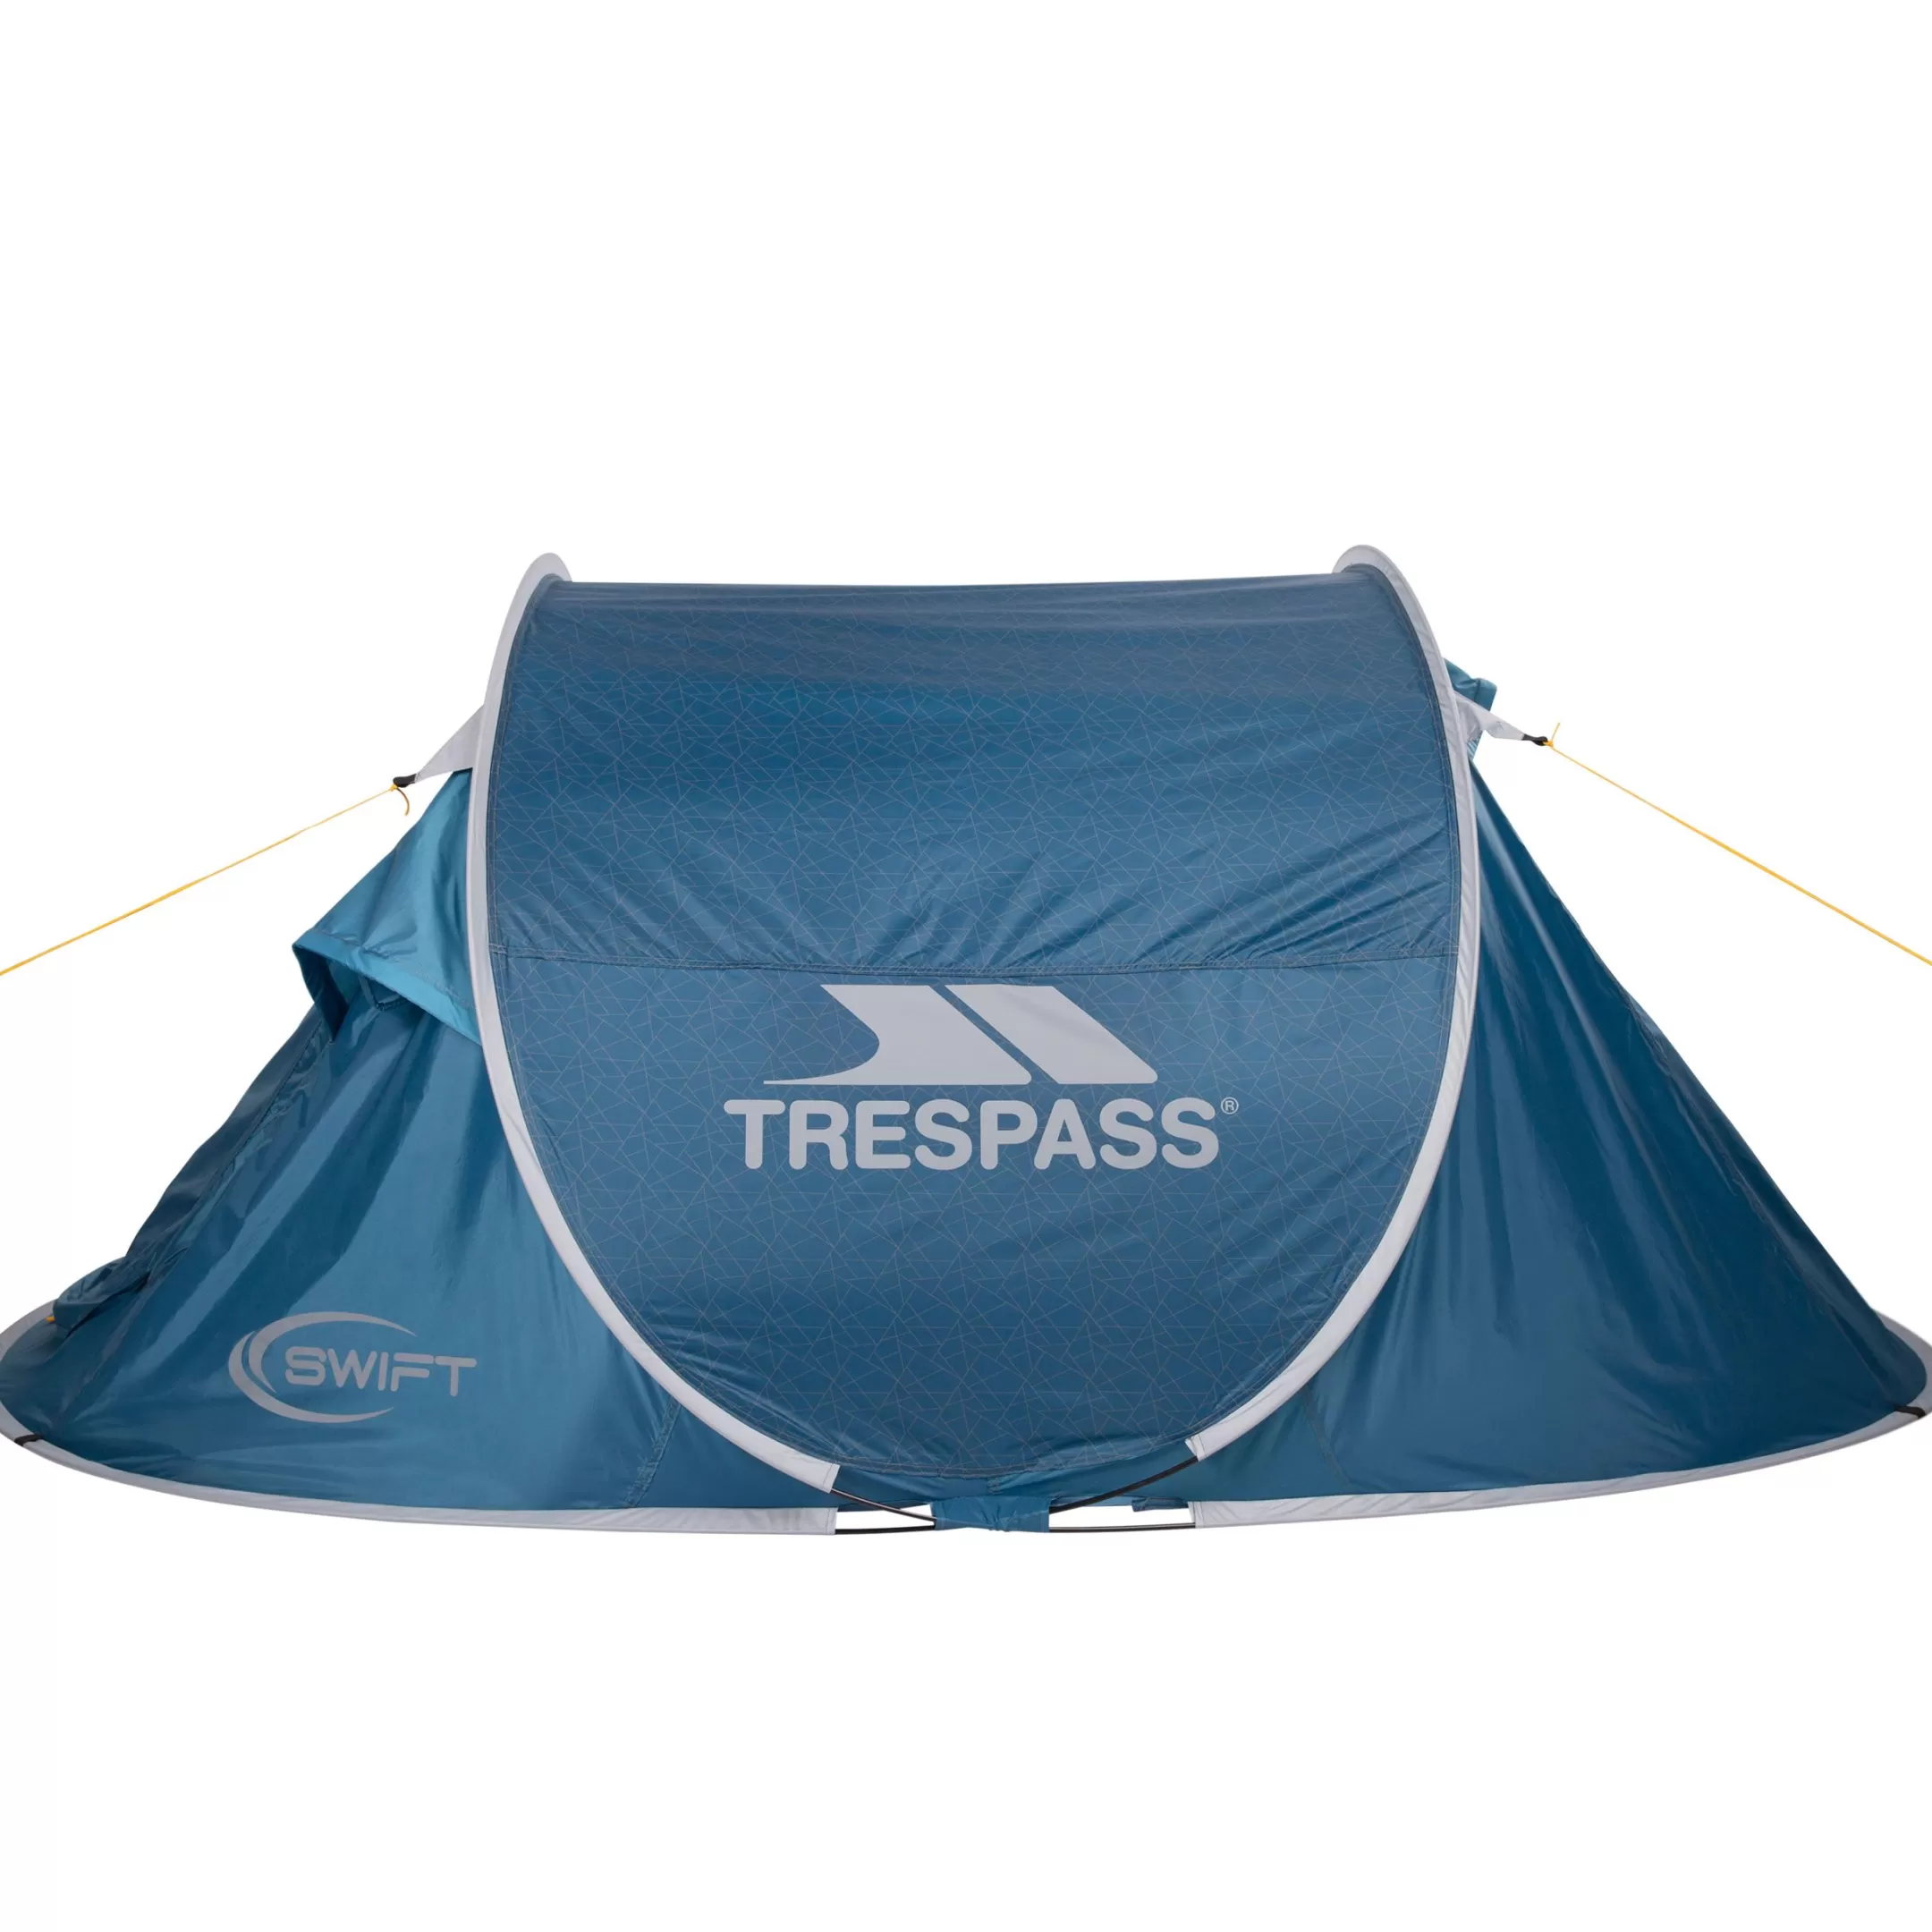 Waterproof 2 Man Pop Up Tent Patterned Swift2 | Trespass Clearance